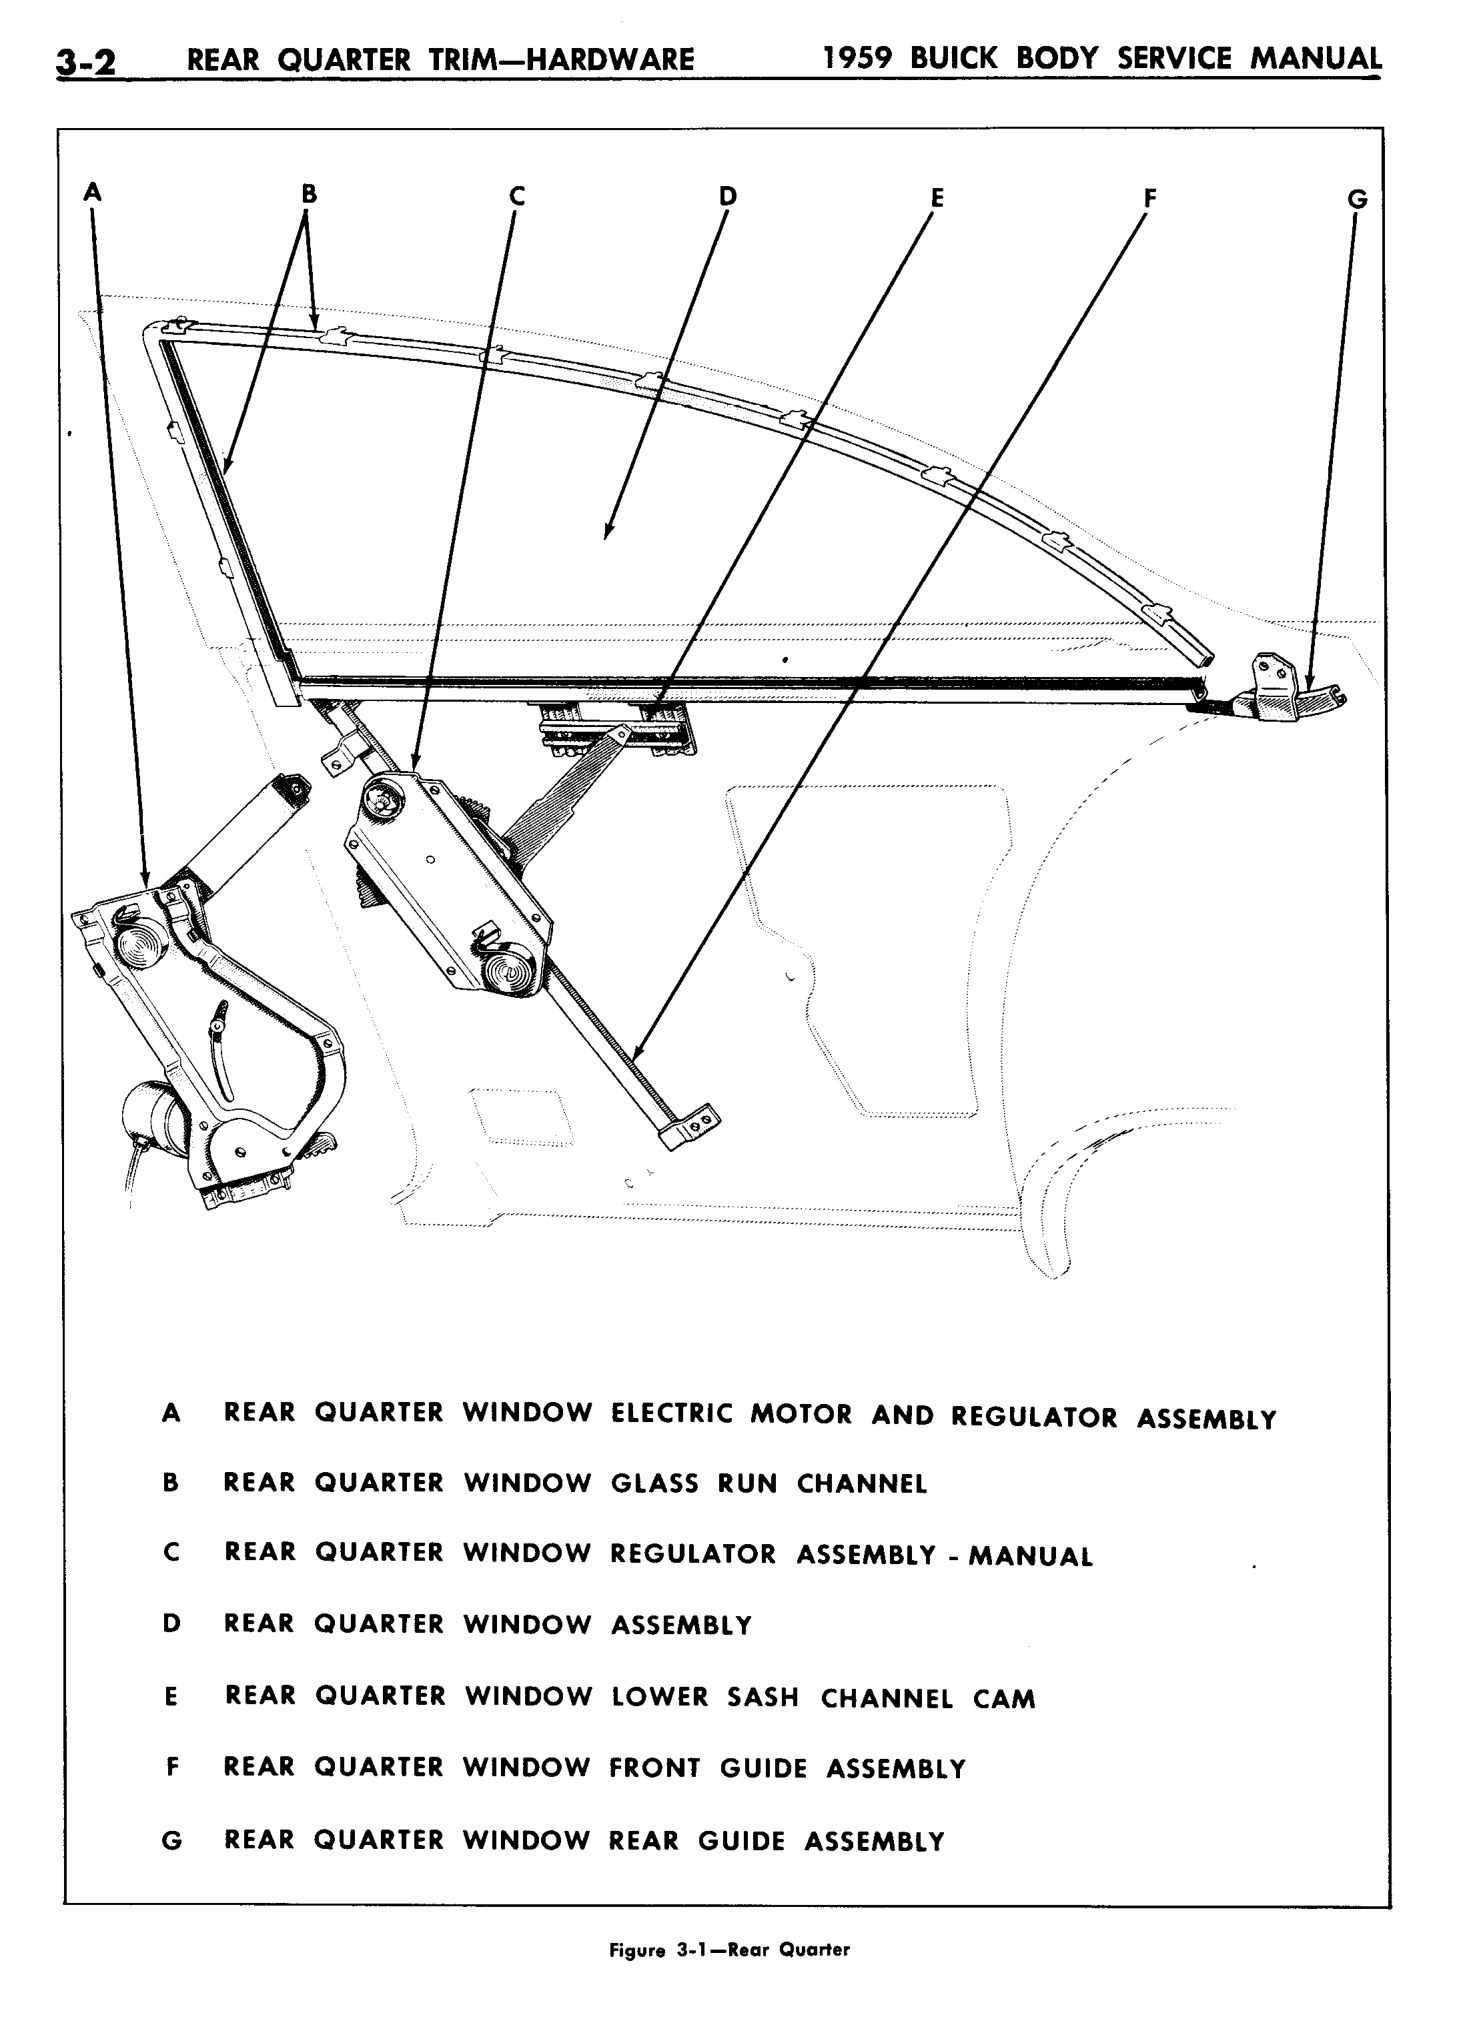 n_04 1959 Buick Body Service-Rear Quarter_2.jpg